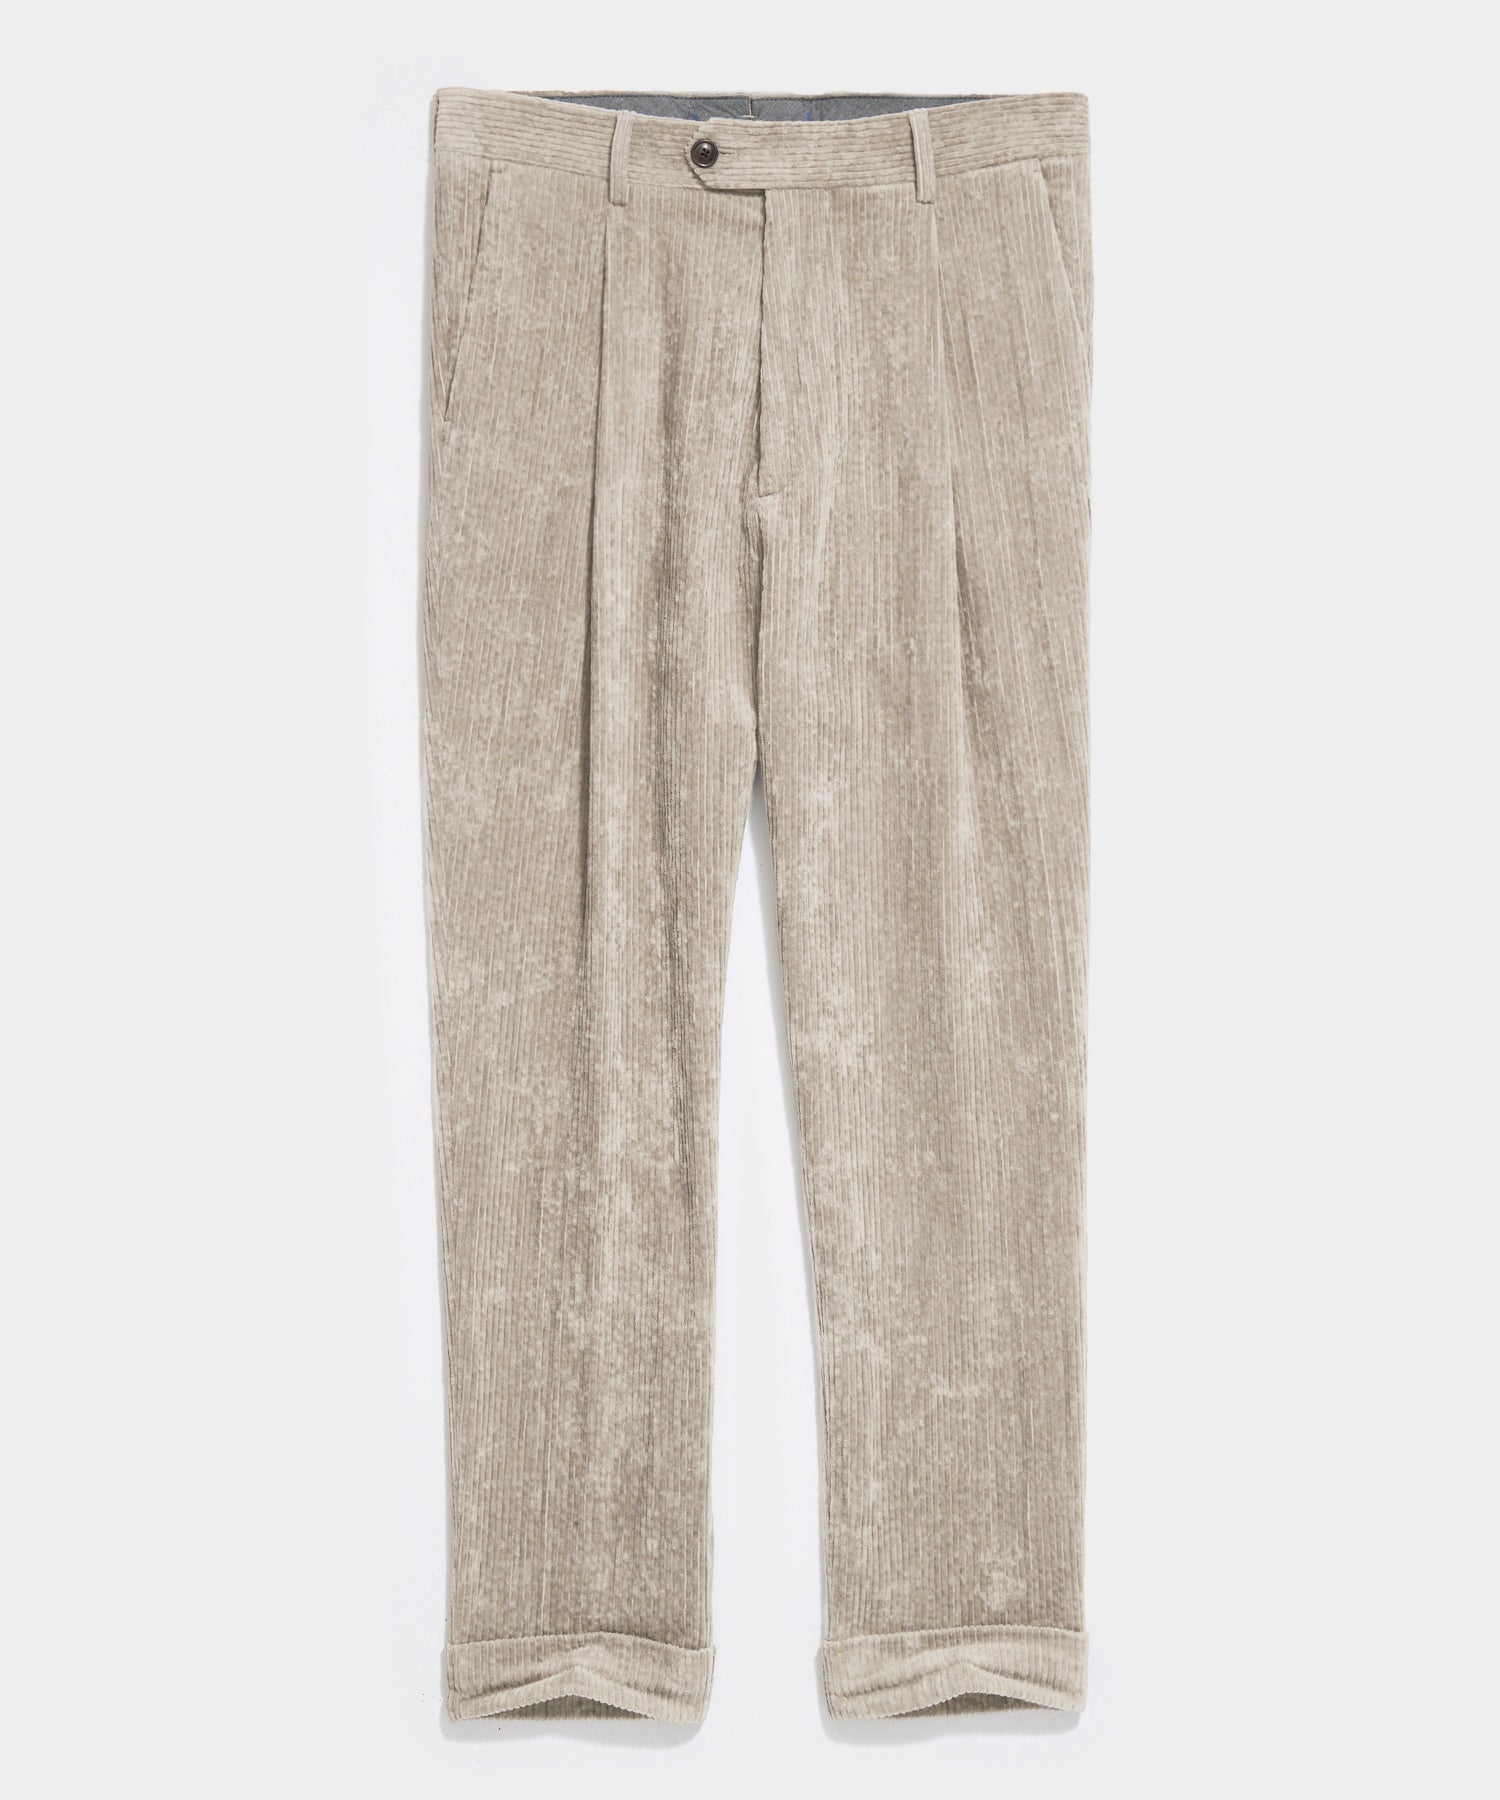 Belvedere Cord Pants - London Grey